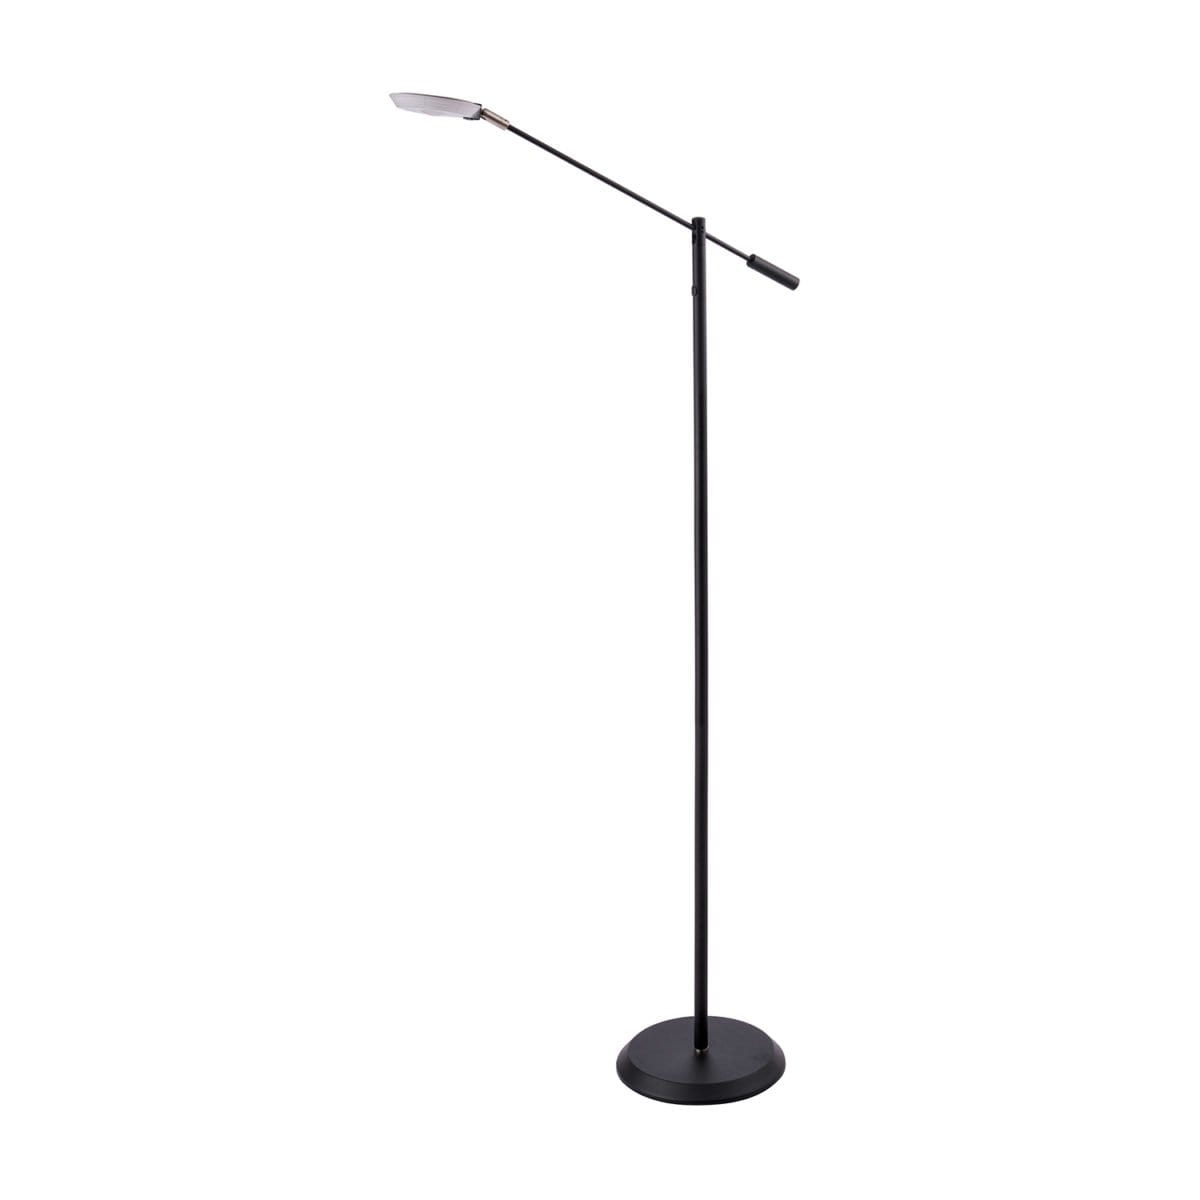 148 FL 5021 BLK
LED Floor Lamp in Black or
Satin Nickle
Regular Price $189.99
Sale Price $132.99